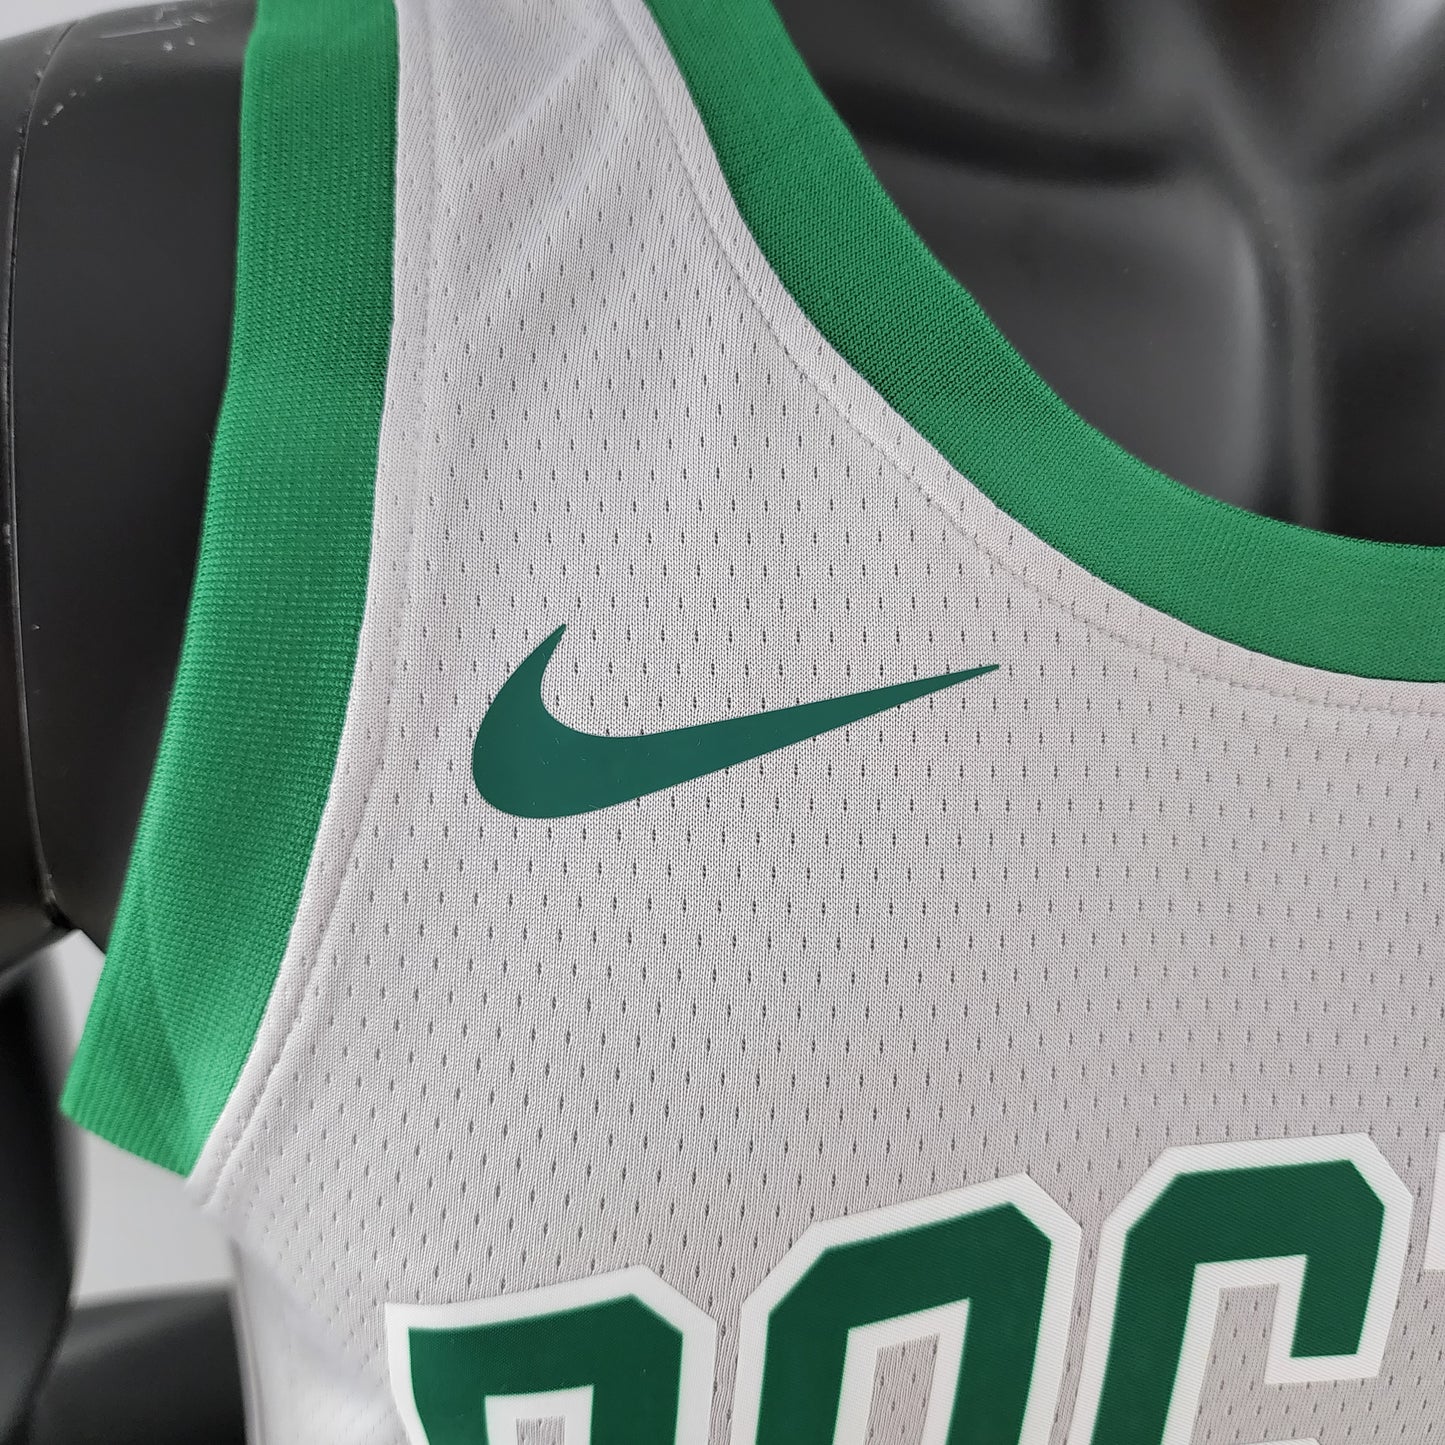 NBA Boston Celtics BROWN-07